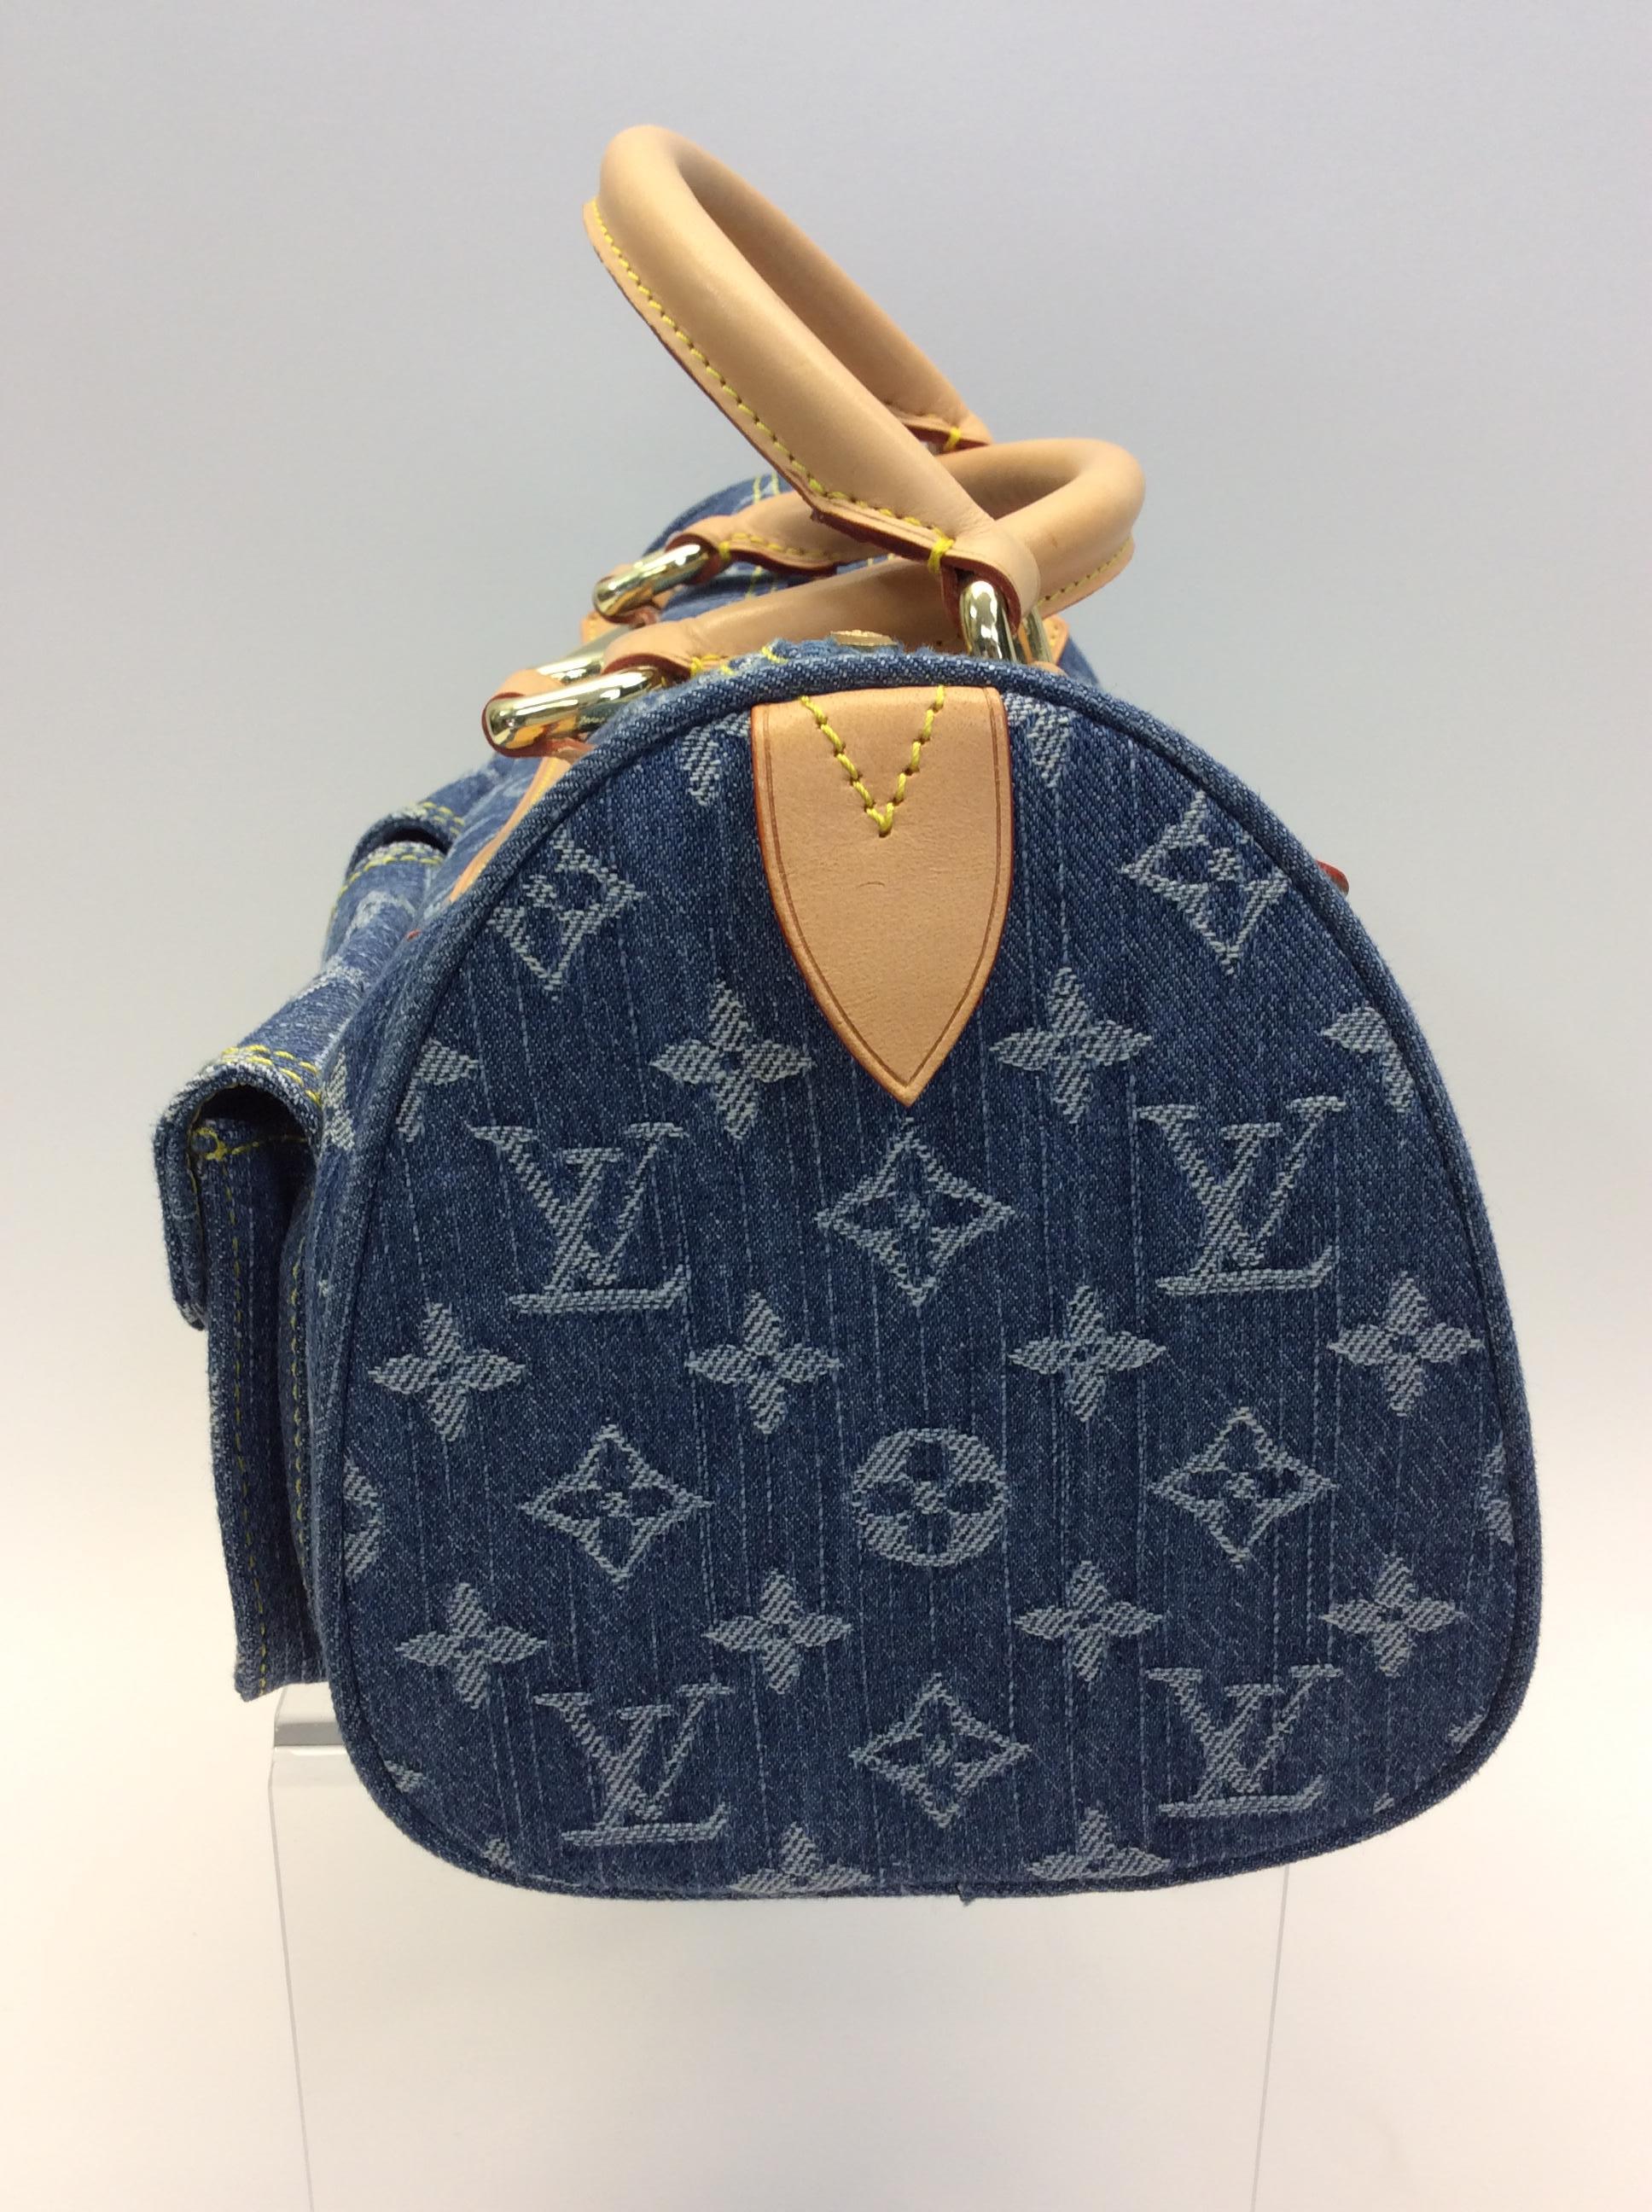 Louis Vuitton Blue Denim Monogram Speedy Bag
$499
Made in France
Denim and Leather
11.5